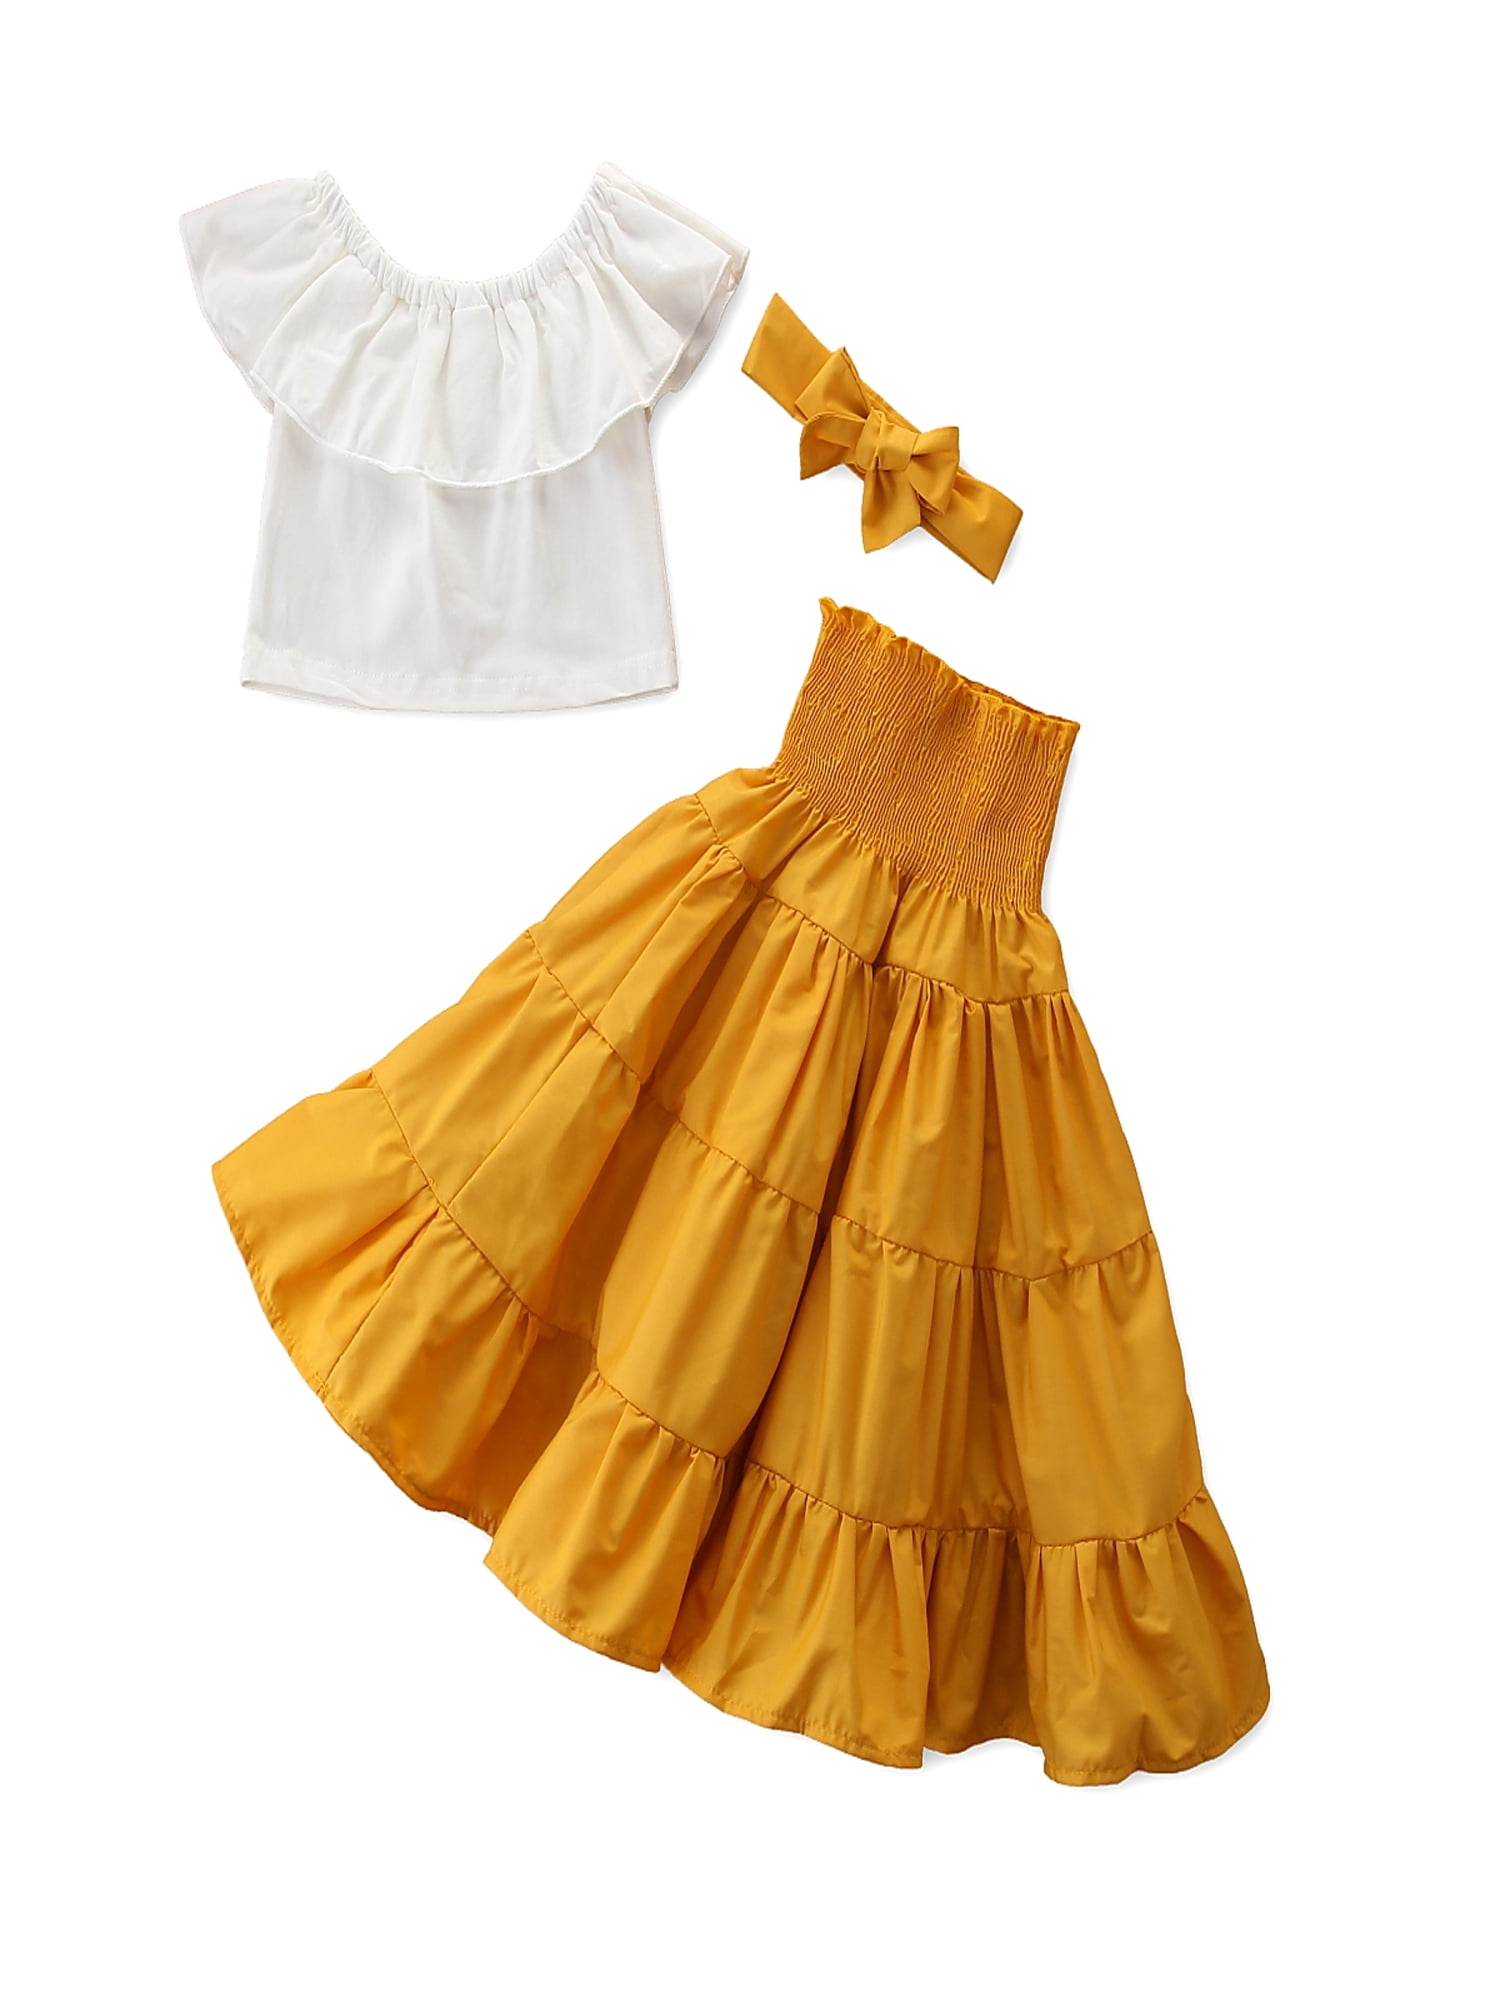 ❤️Ywoow❤️ Summer Girls Dresses Kids Girls Plaid Ruffle Mini Infant Baby Skirt Princess Petticoat Clothes 